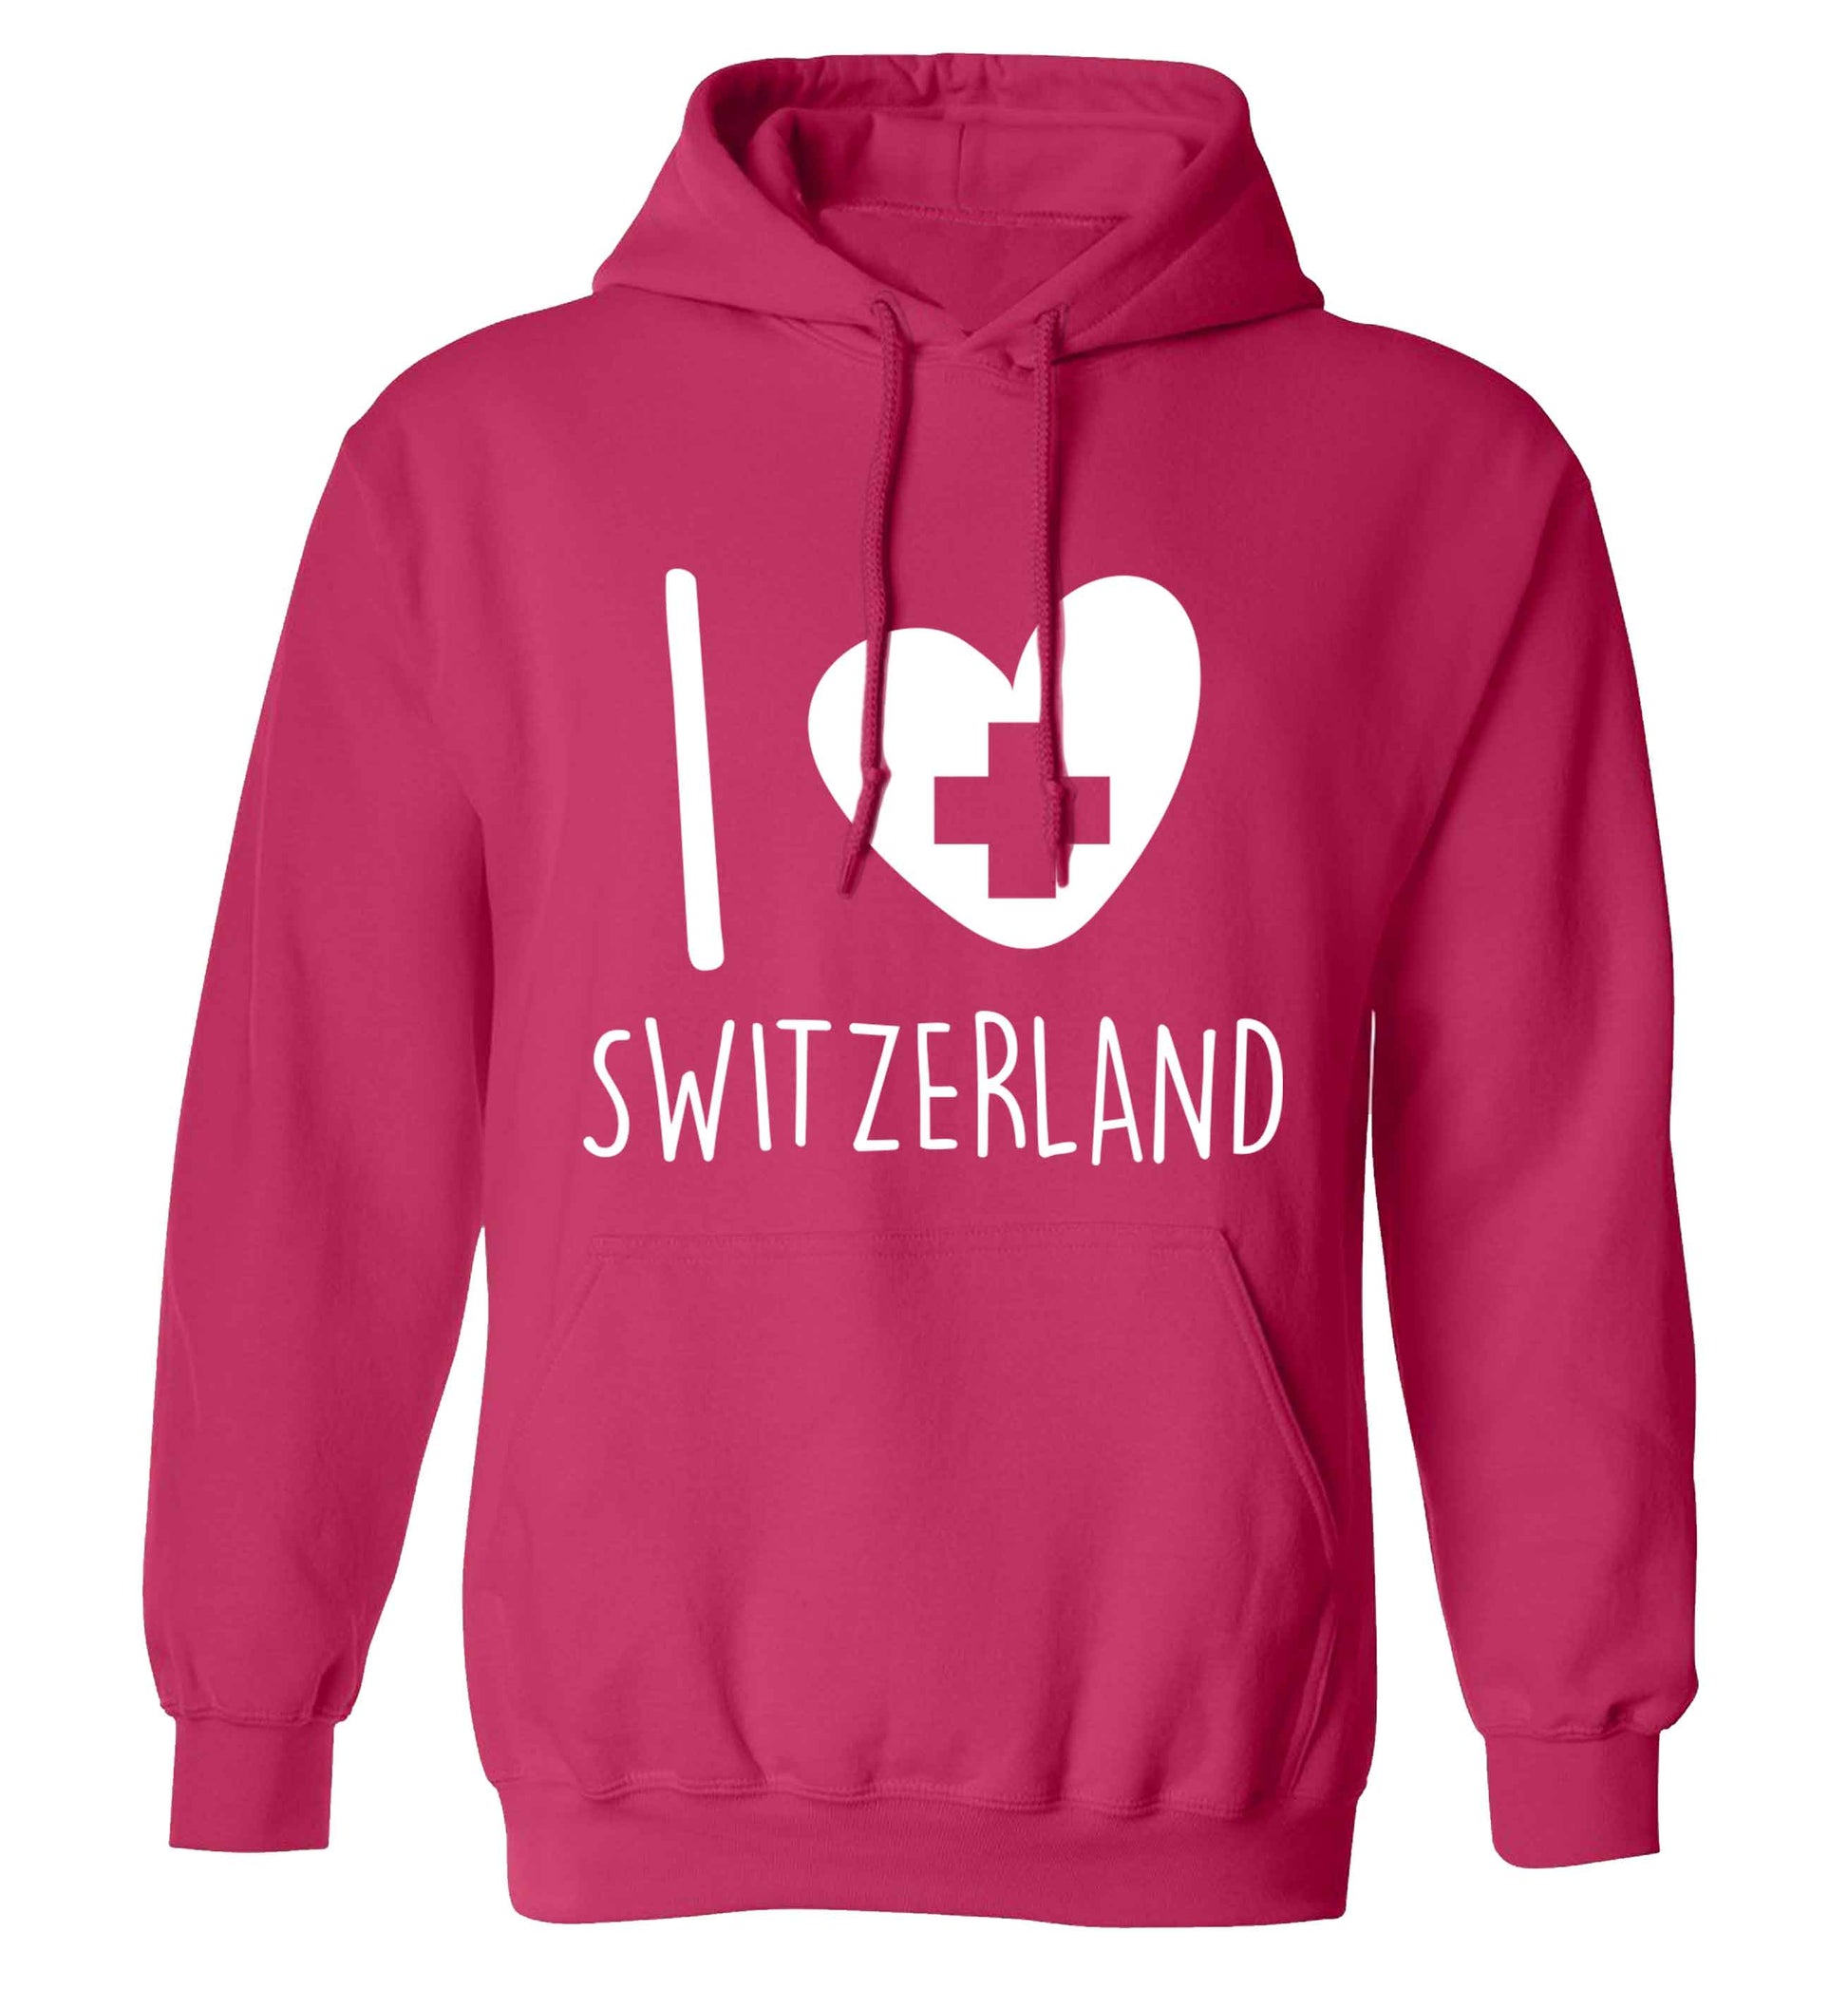 I love switzerland adults unisex pink hoodie 2XL